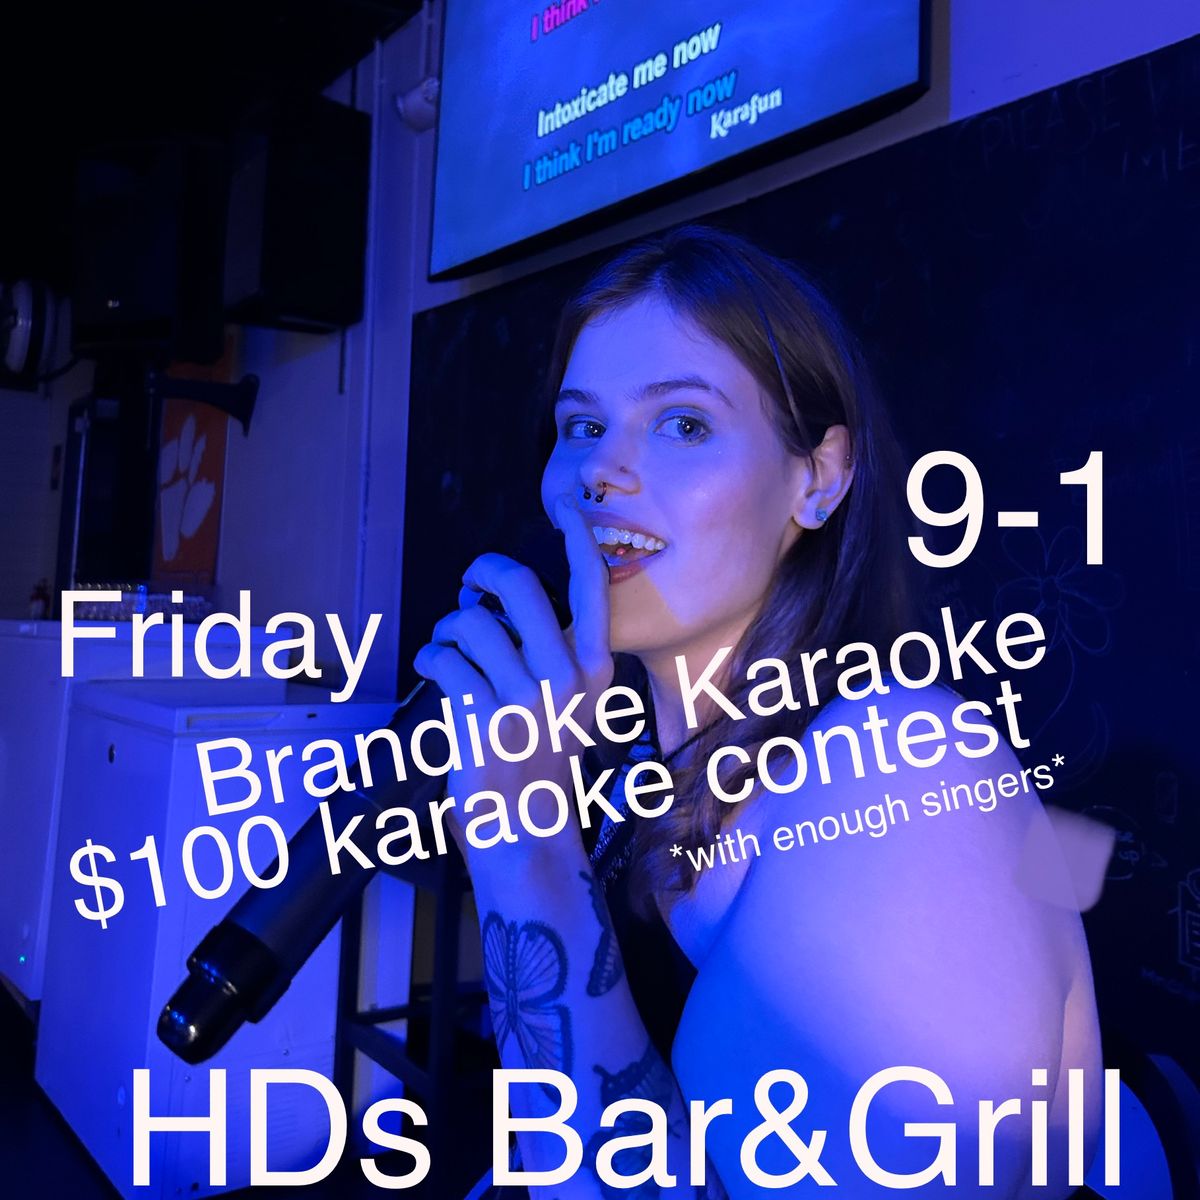 Karaoke Contest $100! Brandioke Karaoke 9-1